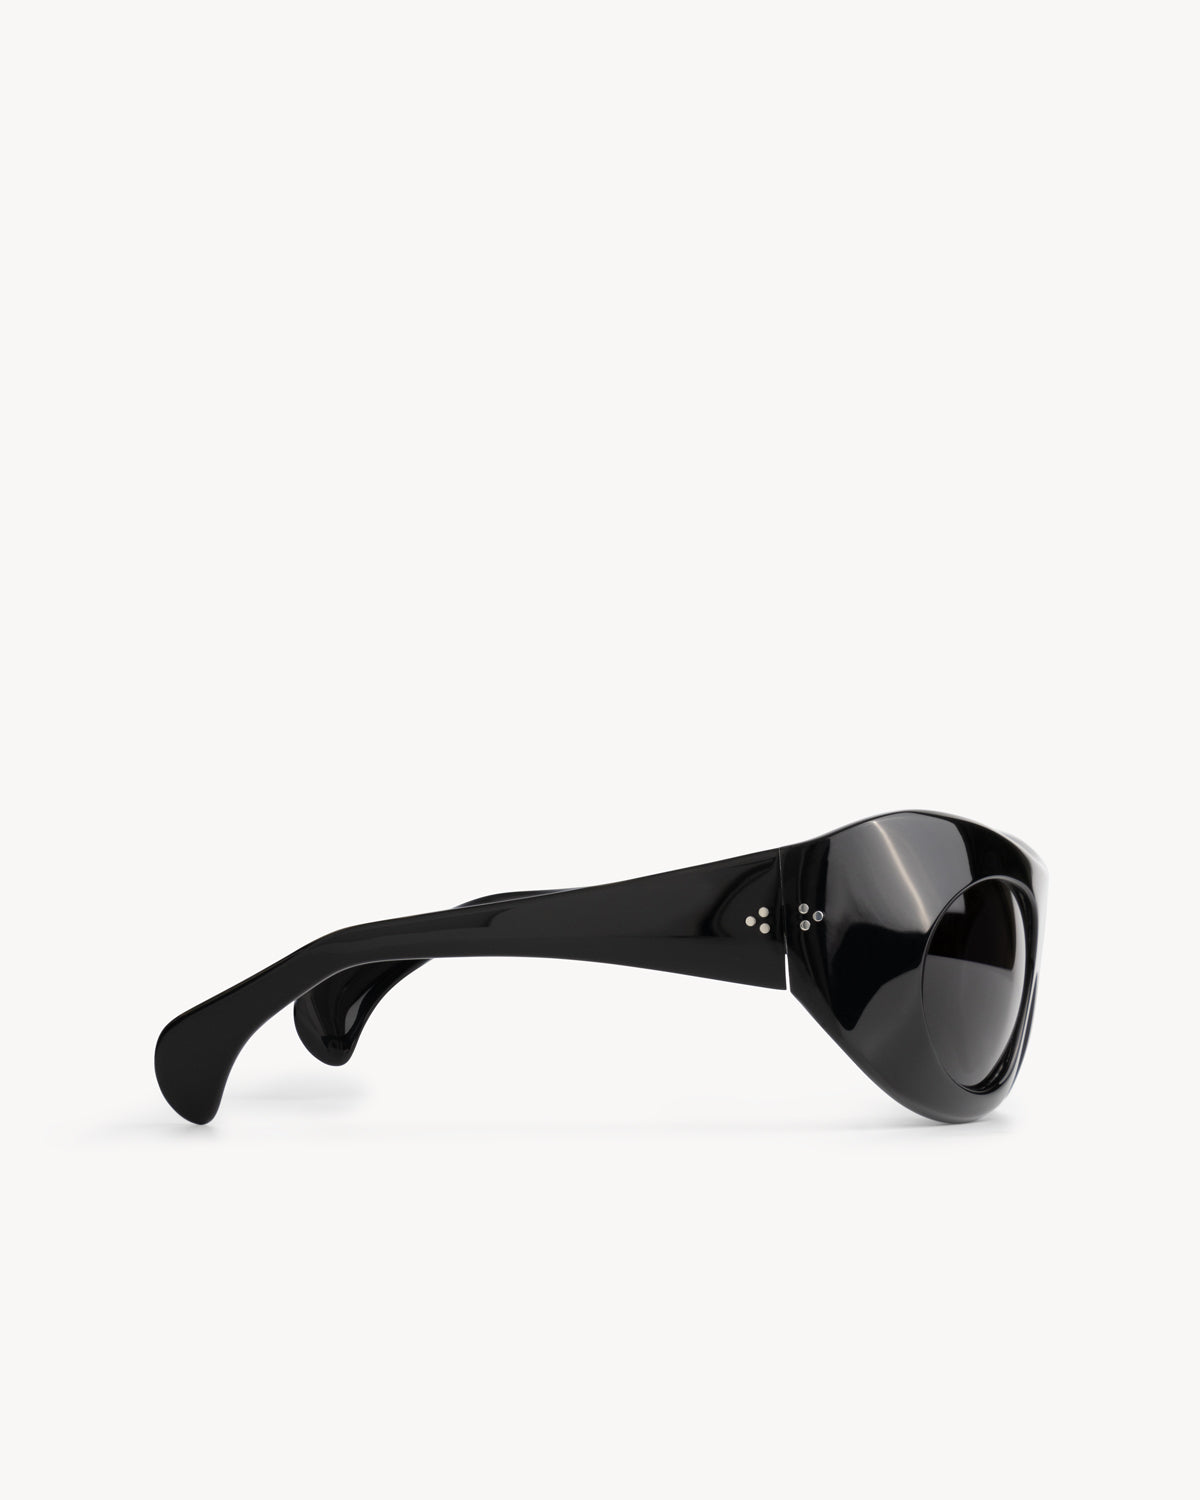 Port Tanger Ruh Sunglasses in Black acetate and Black Lenses 4